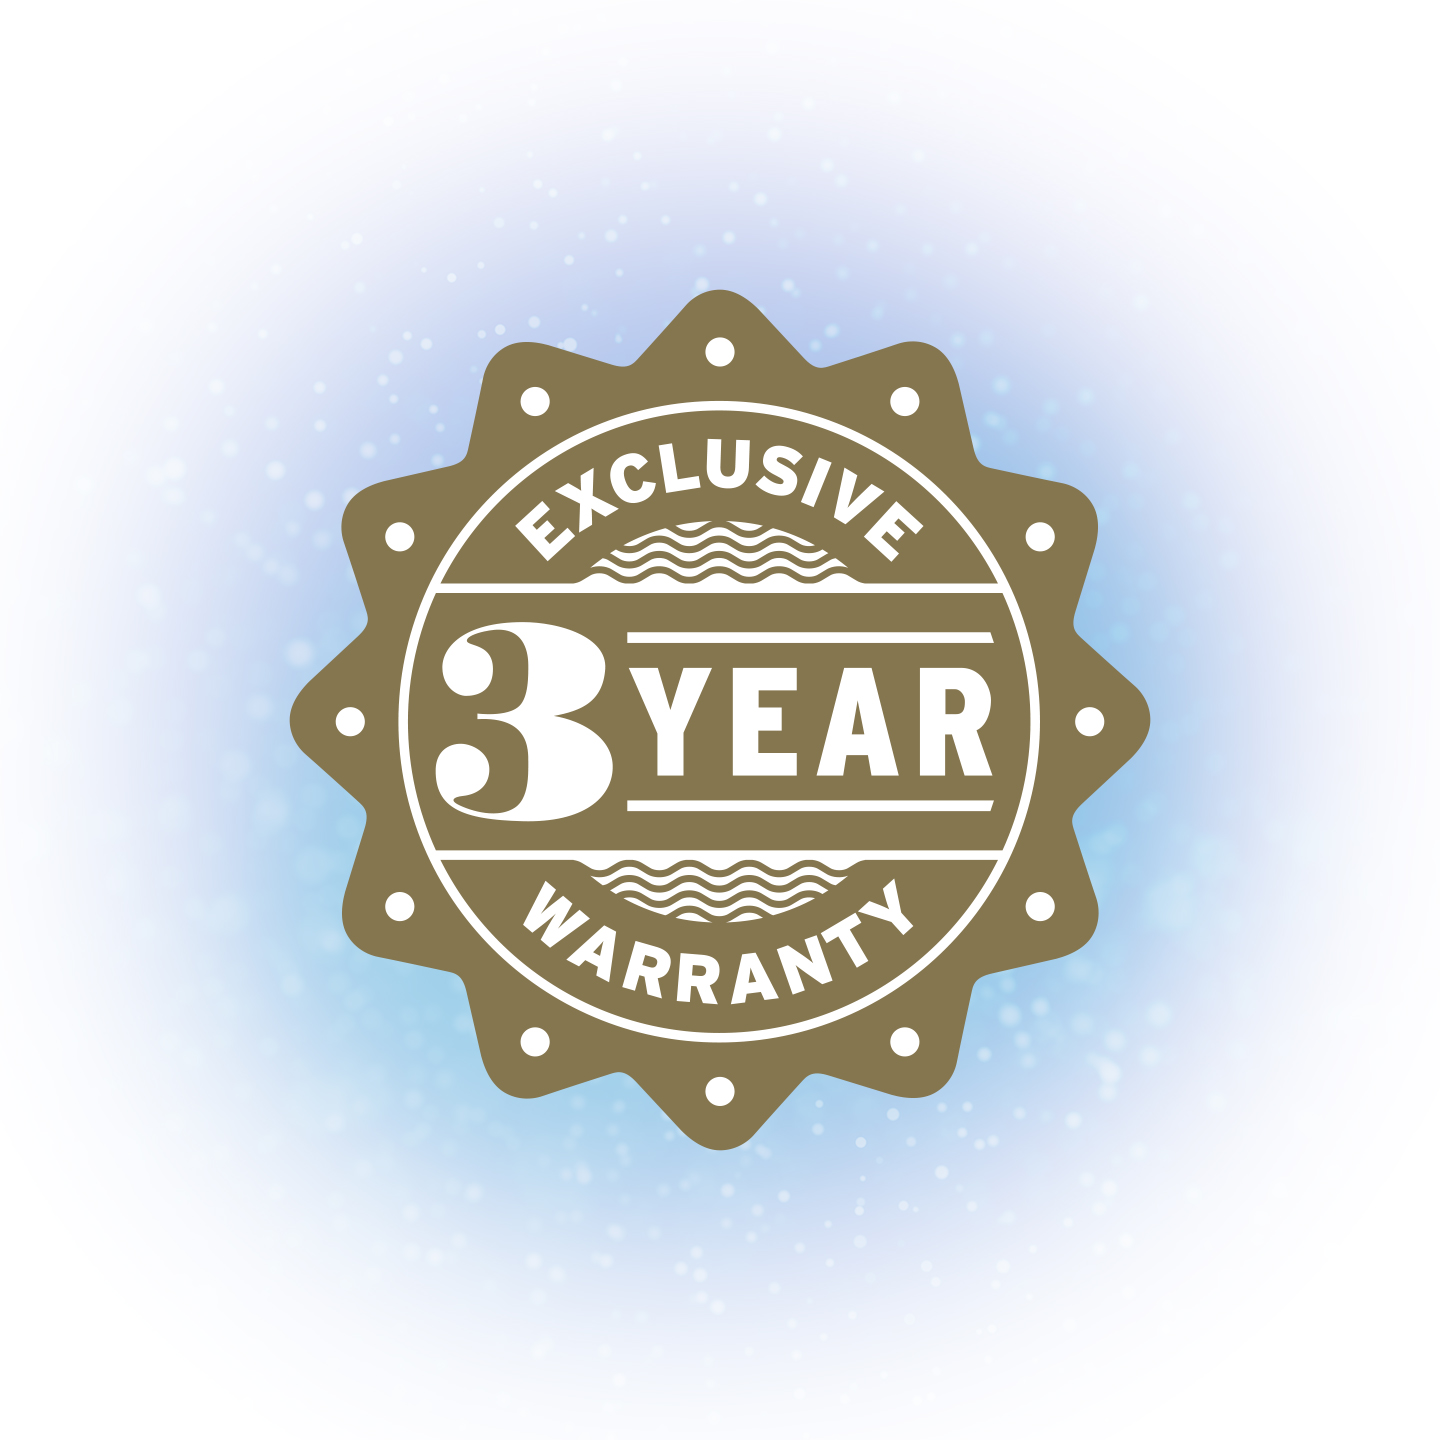 Polaris 3 Year Warranty Badge